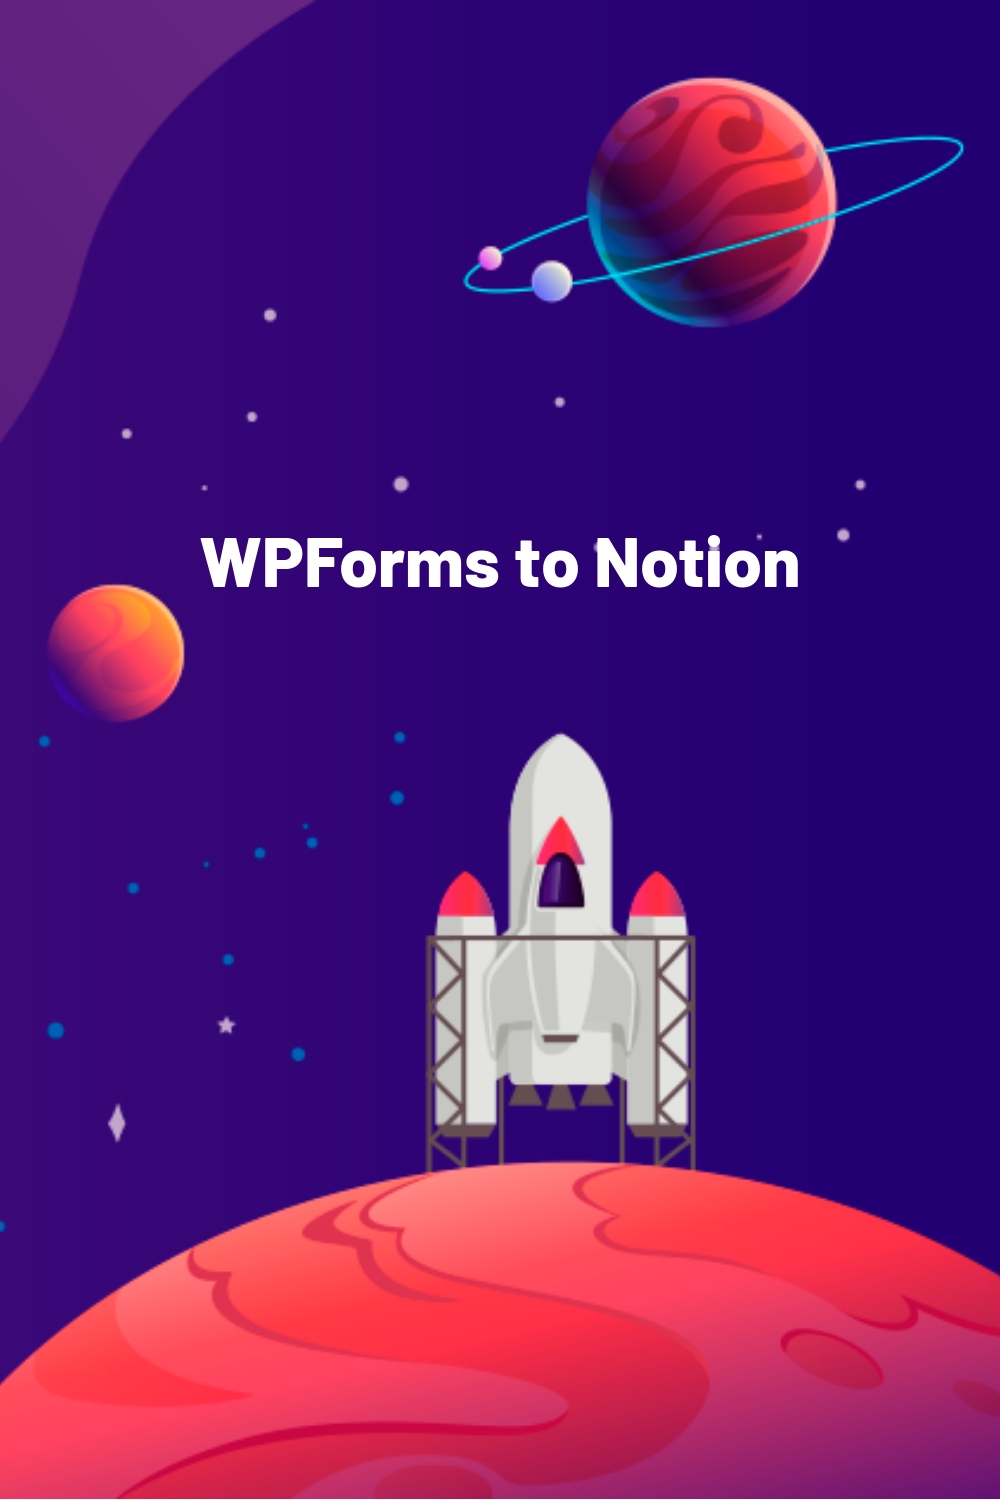 WPForms to Notion